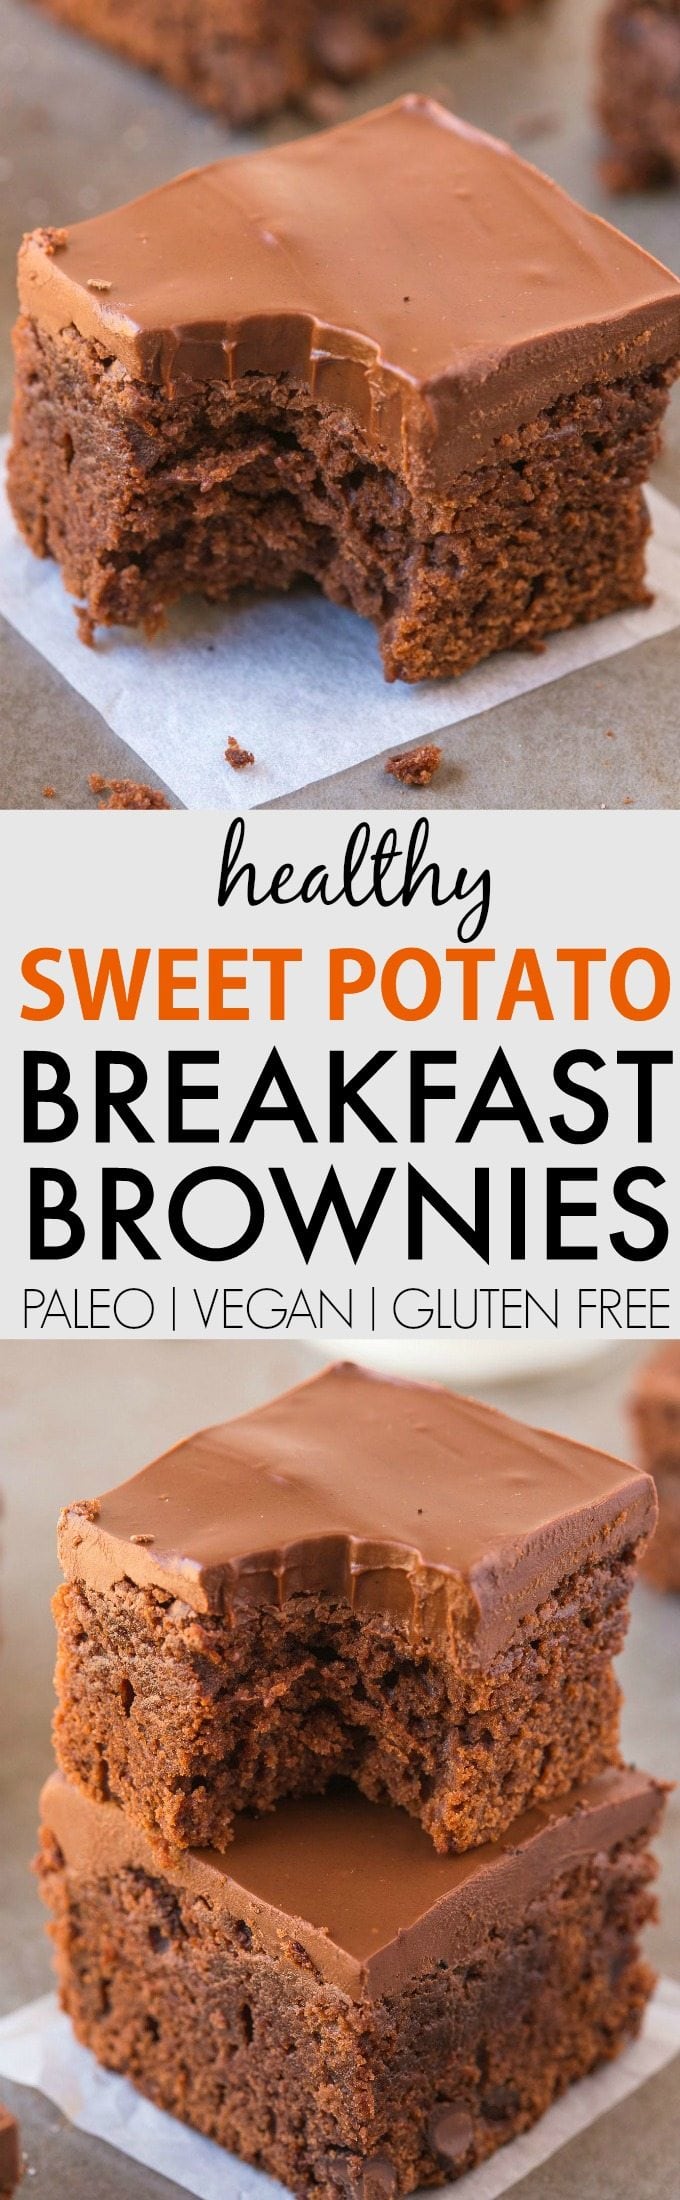 Healthy sweet potato breakfast brownies (paleo, vegan, gluten free)